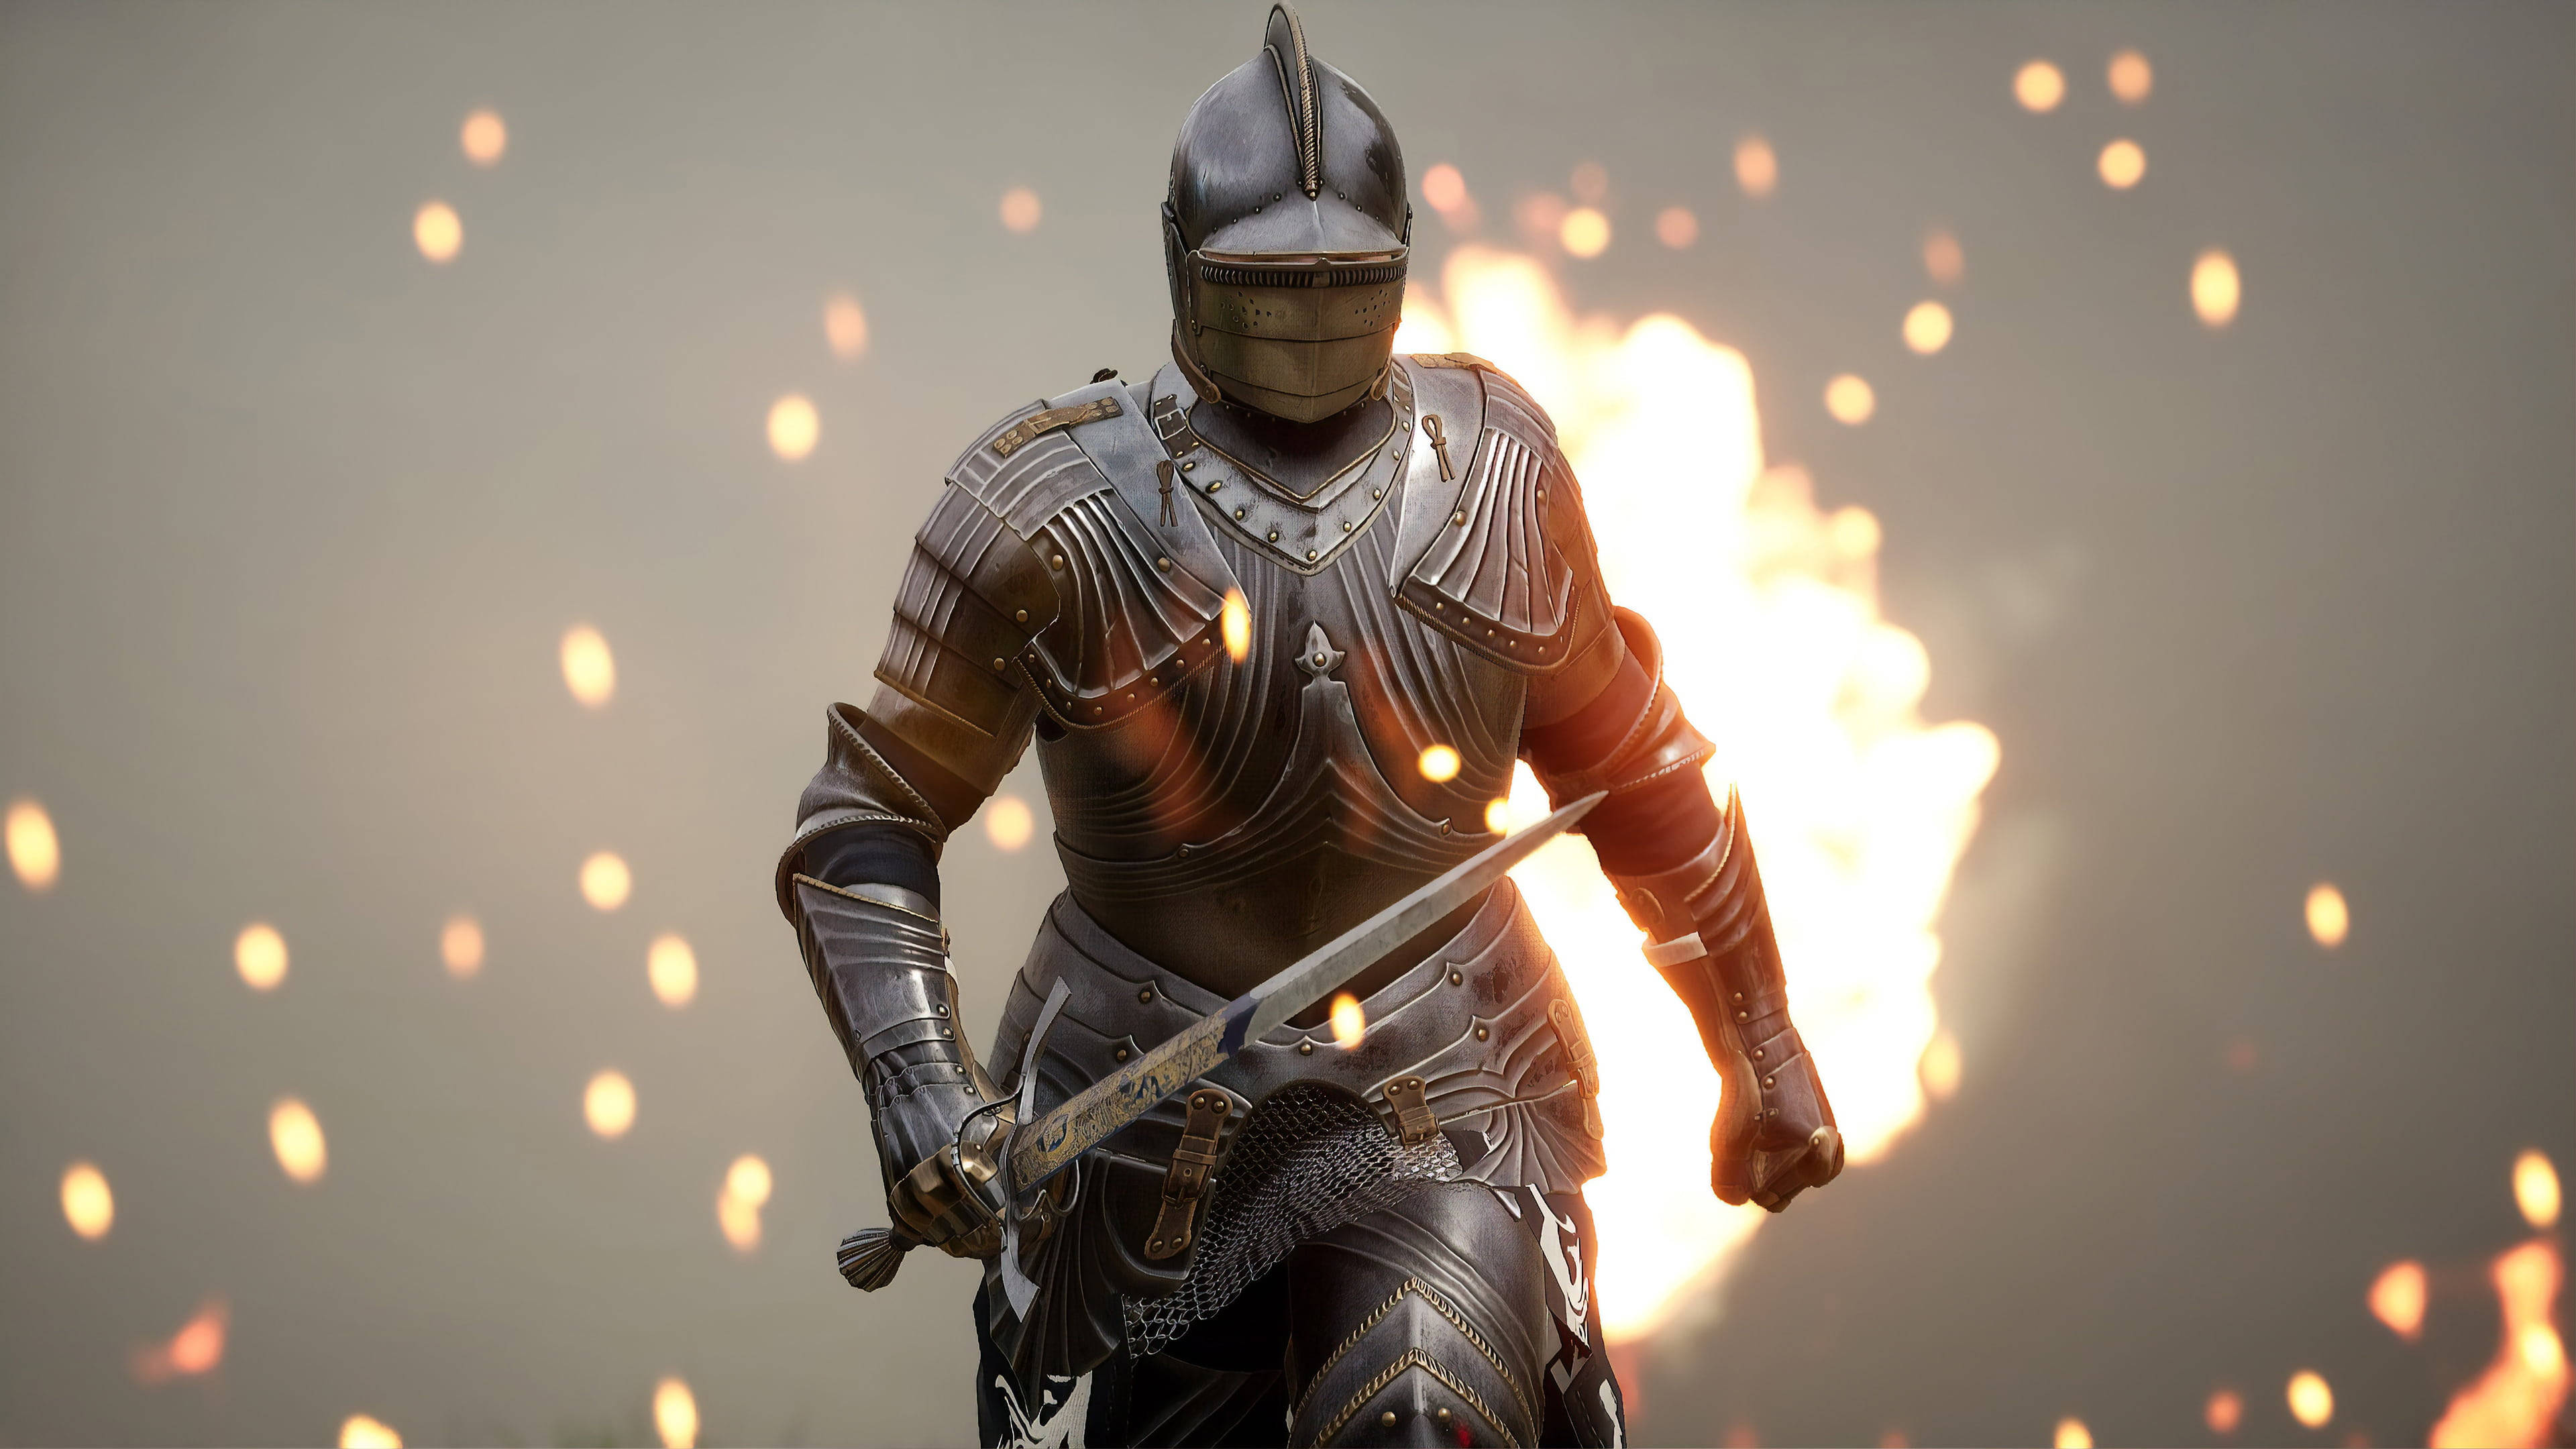 Caption: Striking Mordhau Knight Ready for Battle Wallpaper